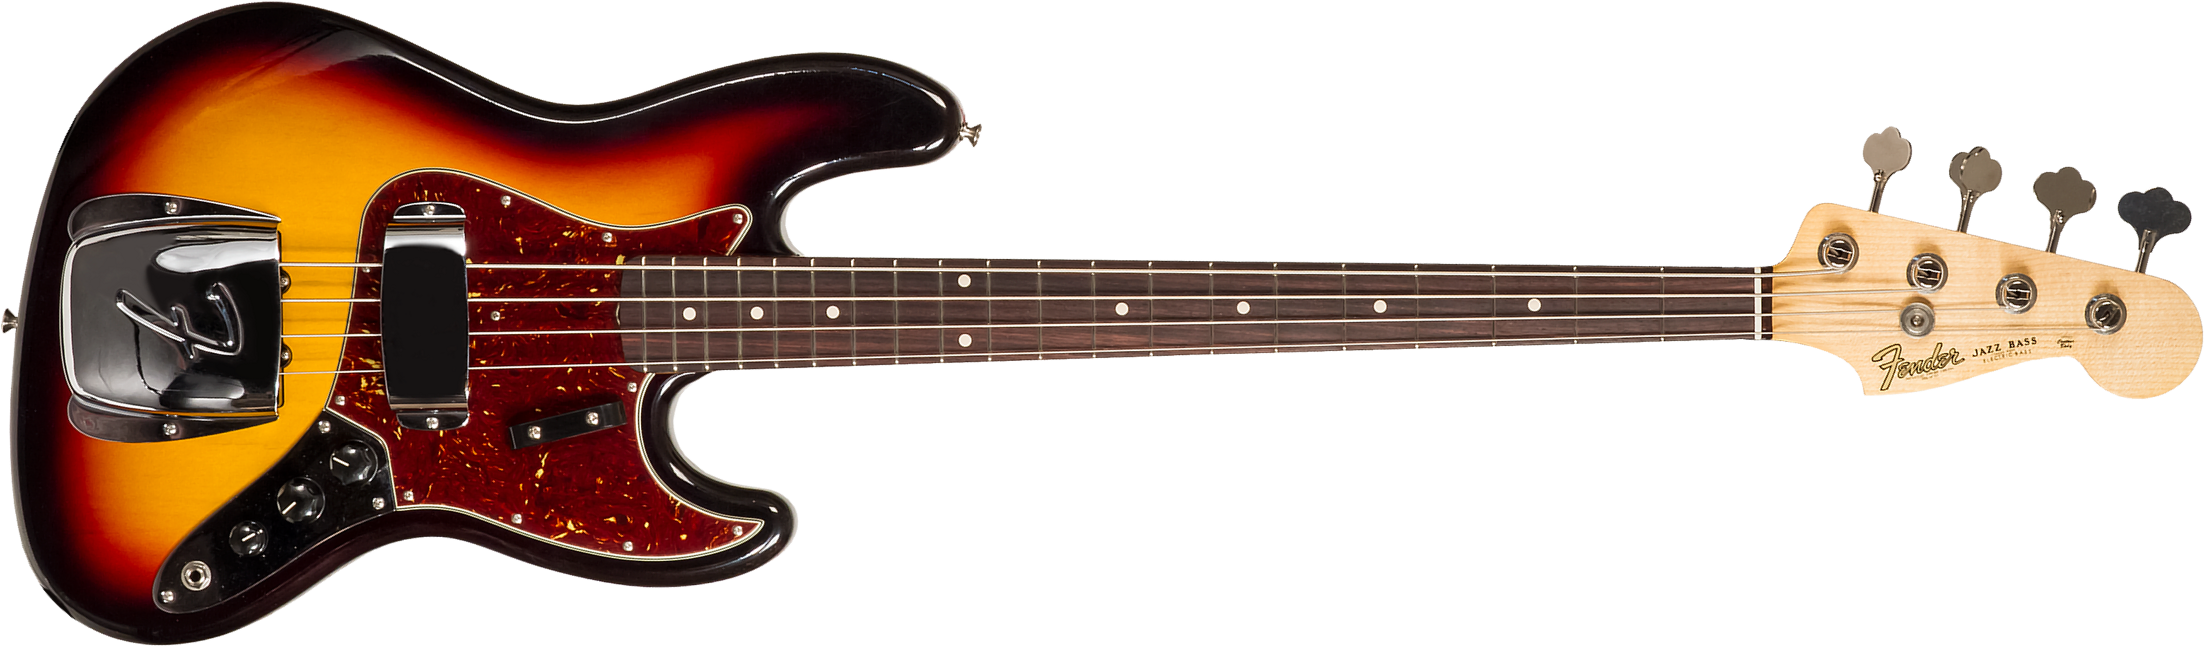 Fender Custom Shop Jazz Bass 1964 Rw #r129293 - Closet Classic 3-color Sunburst - Solid body electric bass - Main picture